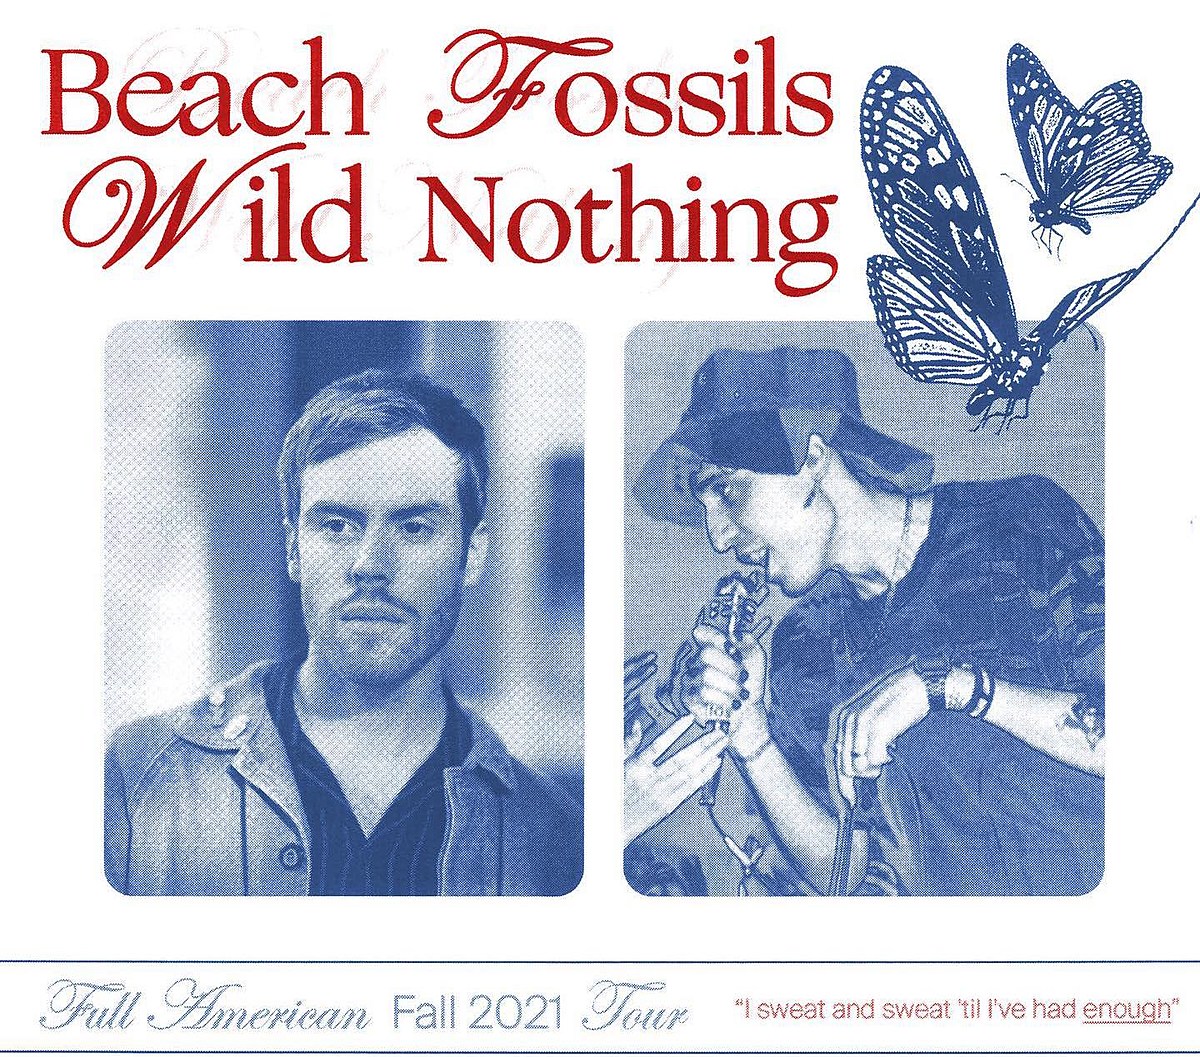 the beach fossils tour